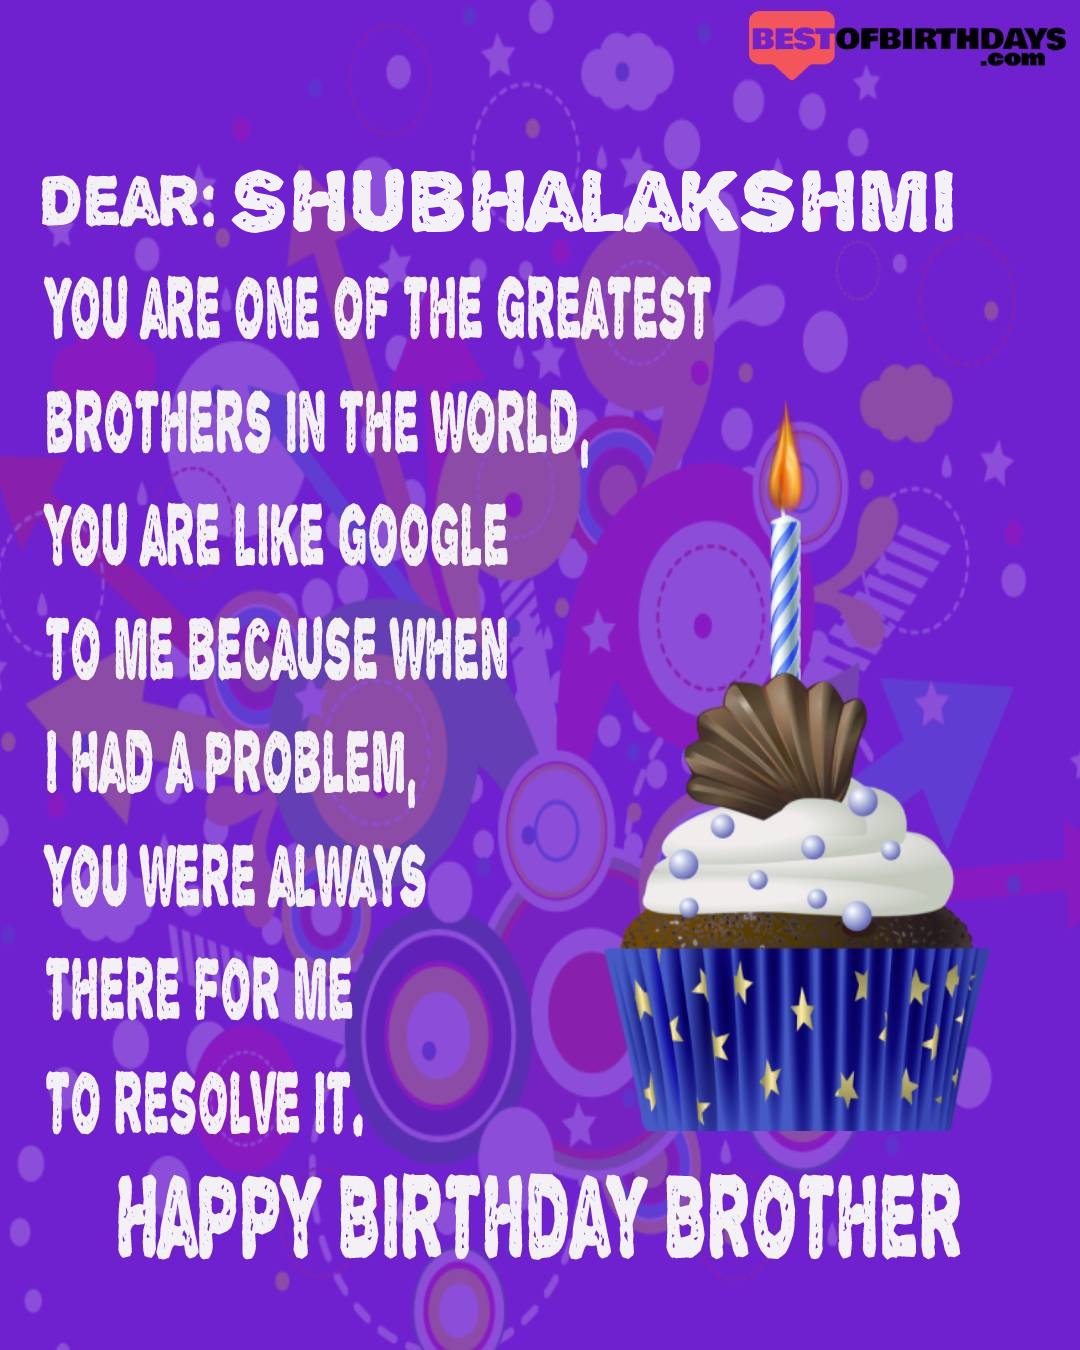 Happy birthday shubhalakshmi bhai brother bro